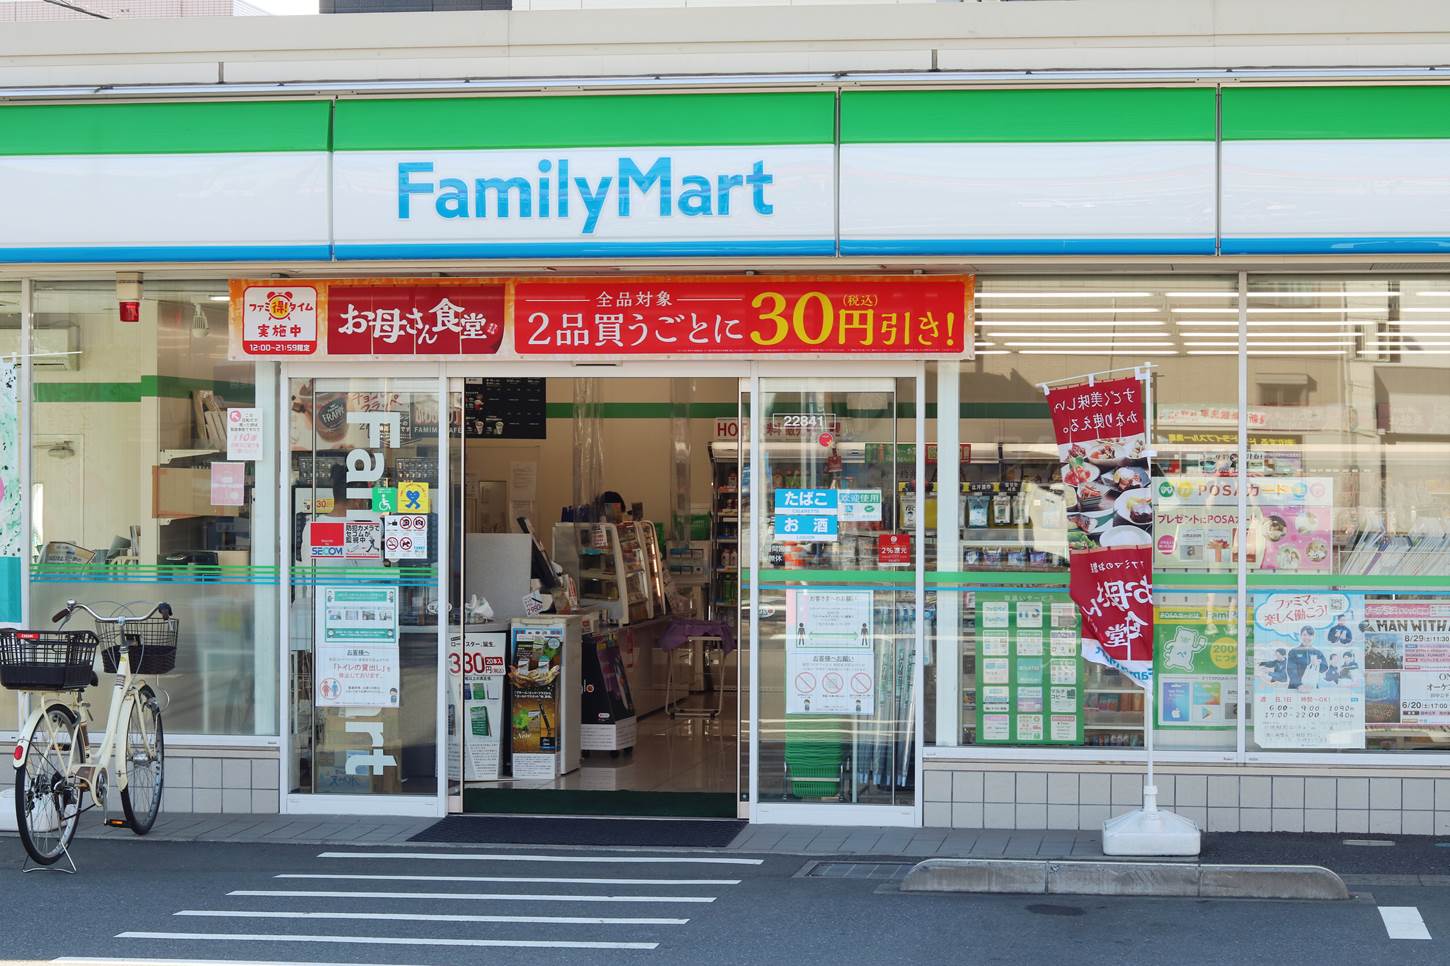 A Familymart convenience store in Ichikawa city, Japan = Shutterstock